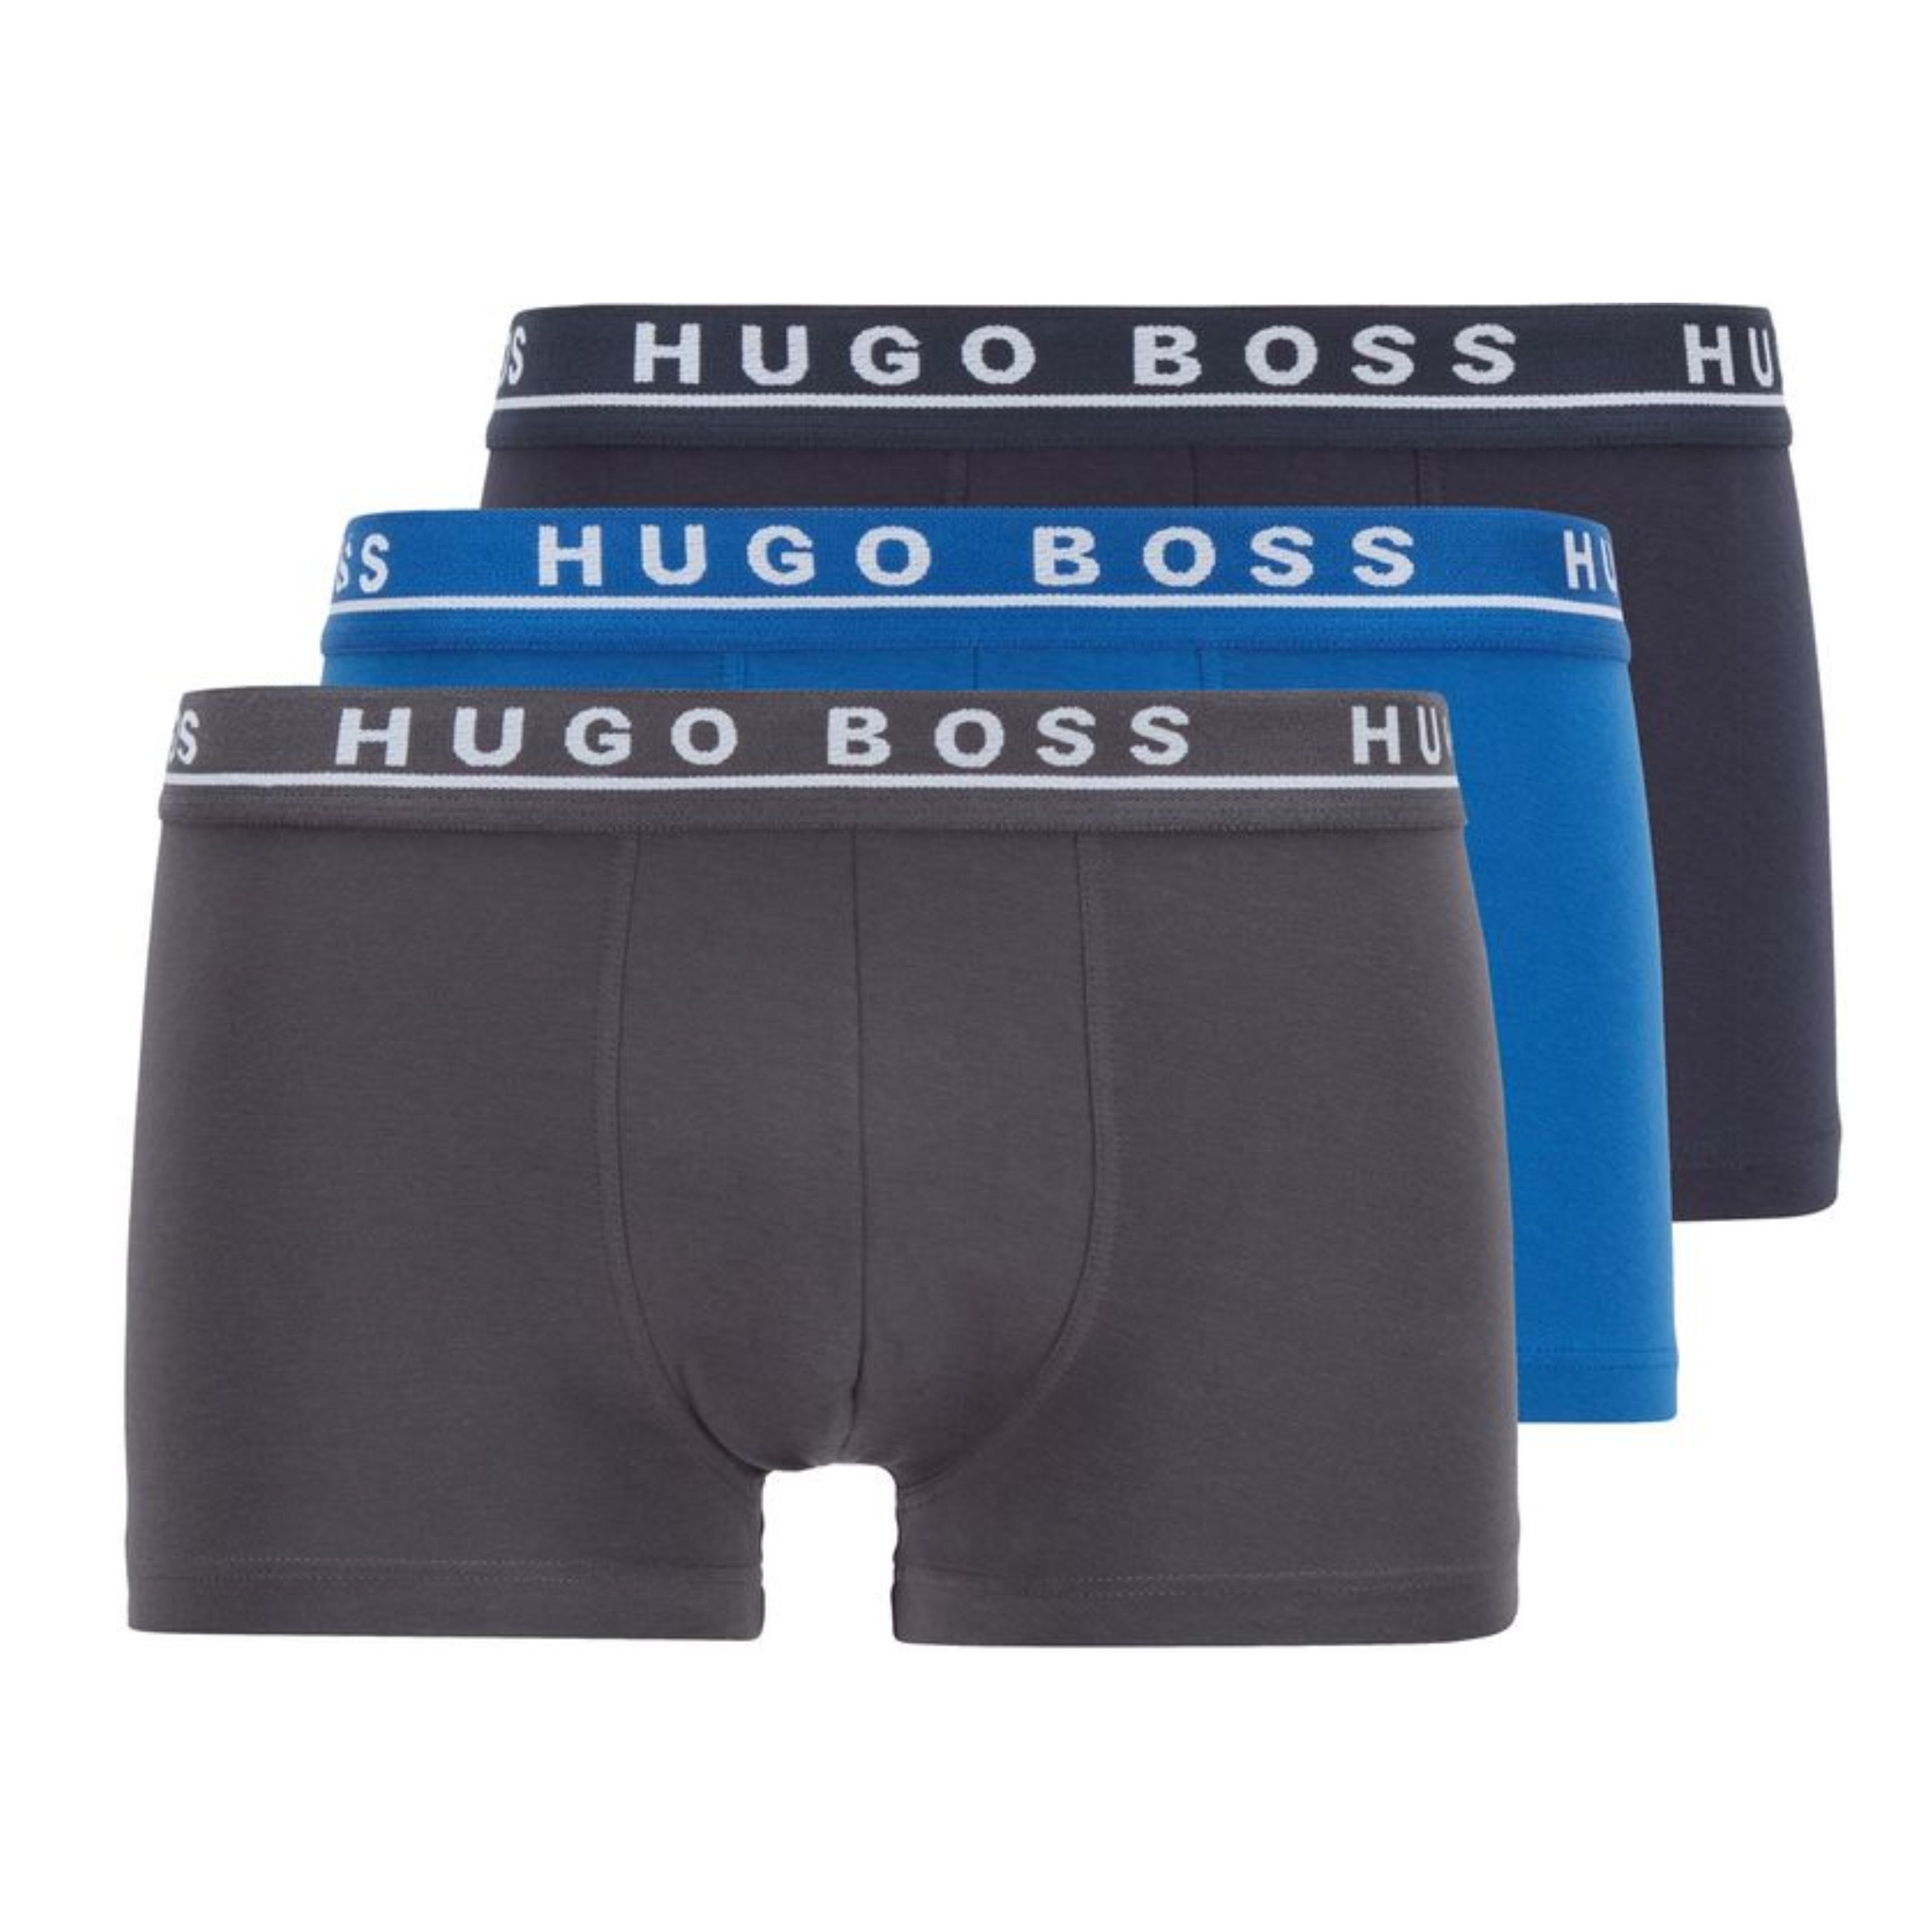 Hugo Boss boxers